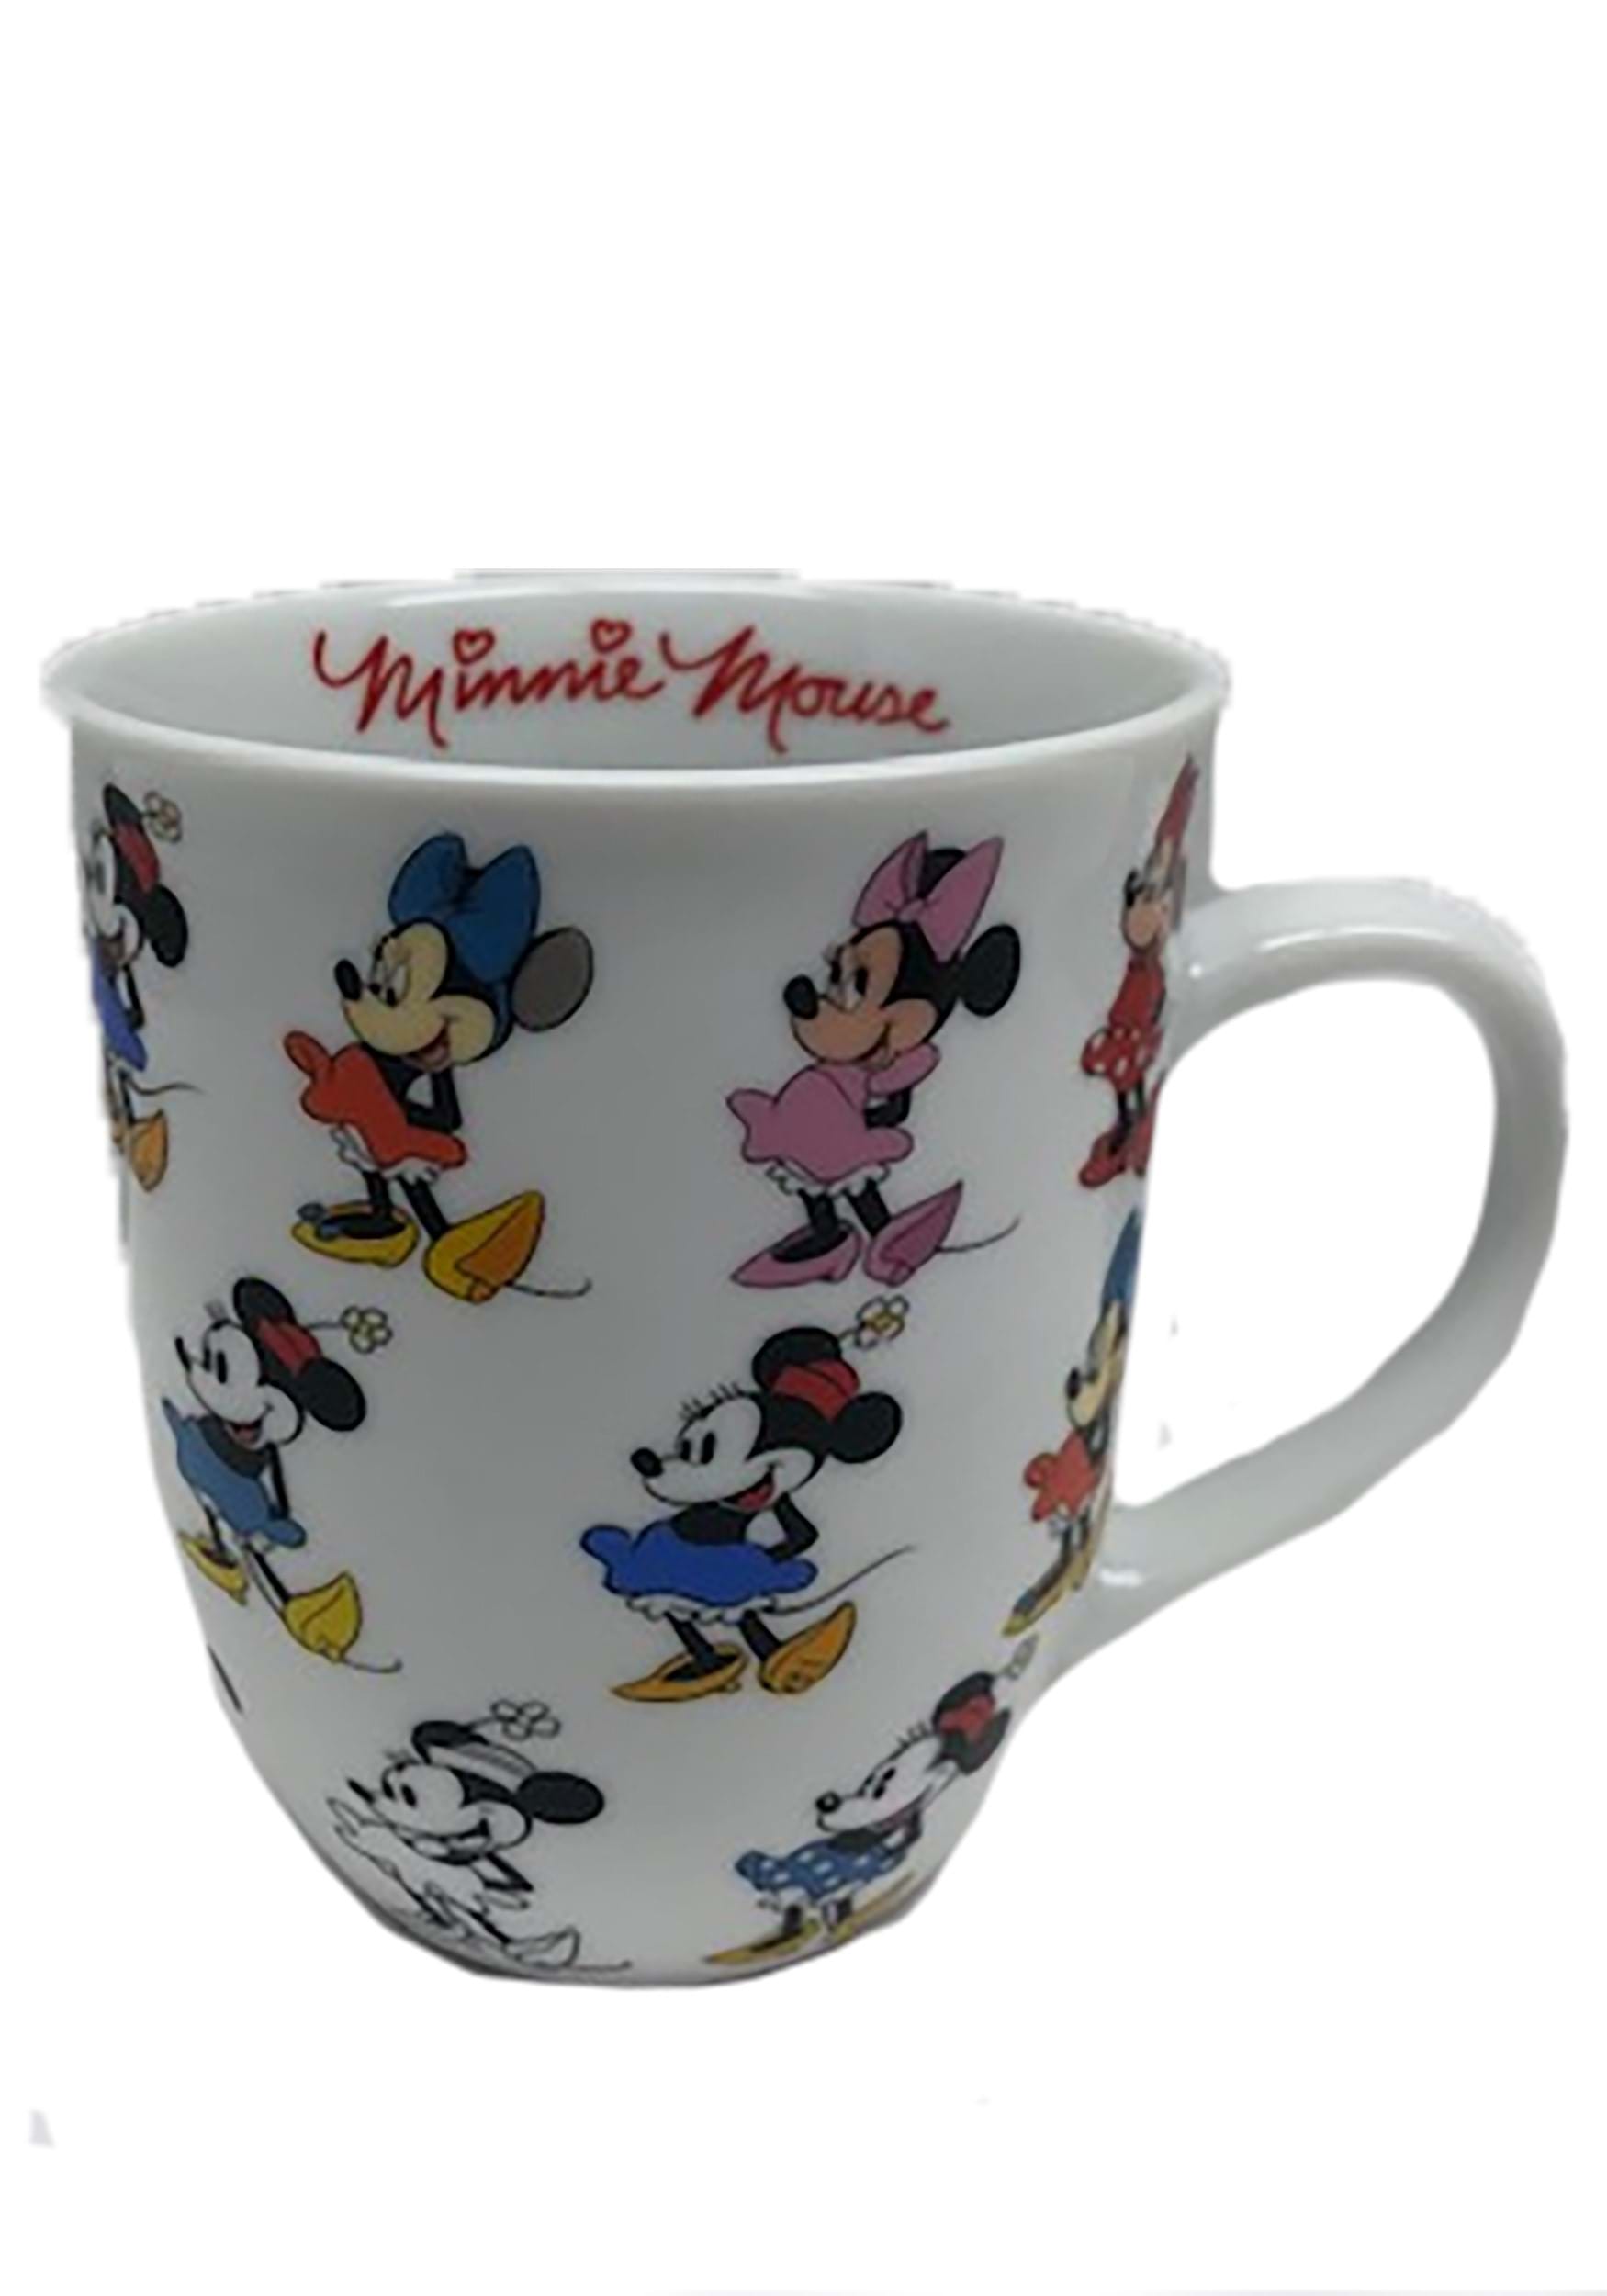 Evolution of Minnie Mouse Mug